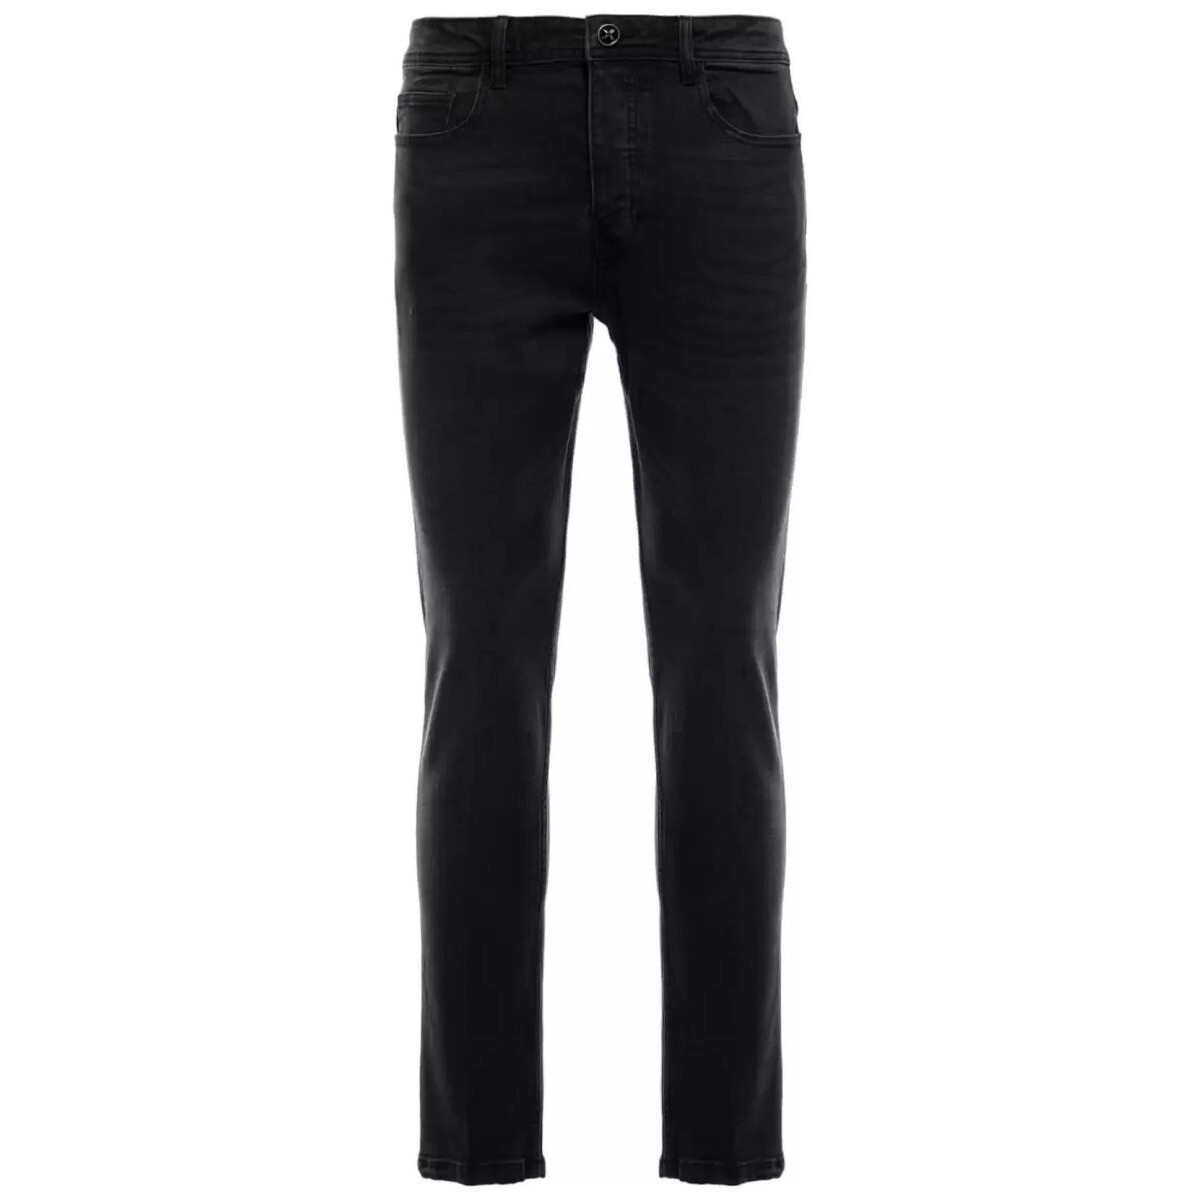 Vêtements Homme leg Jeans John Richmond leg jeans noir mince Noir